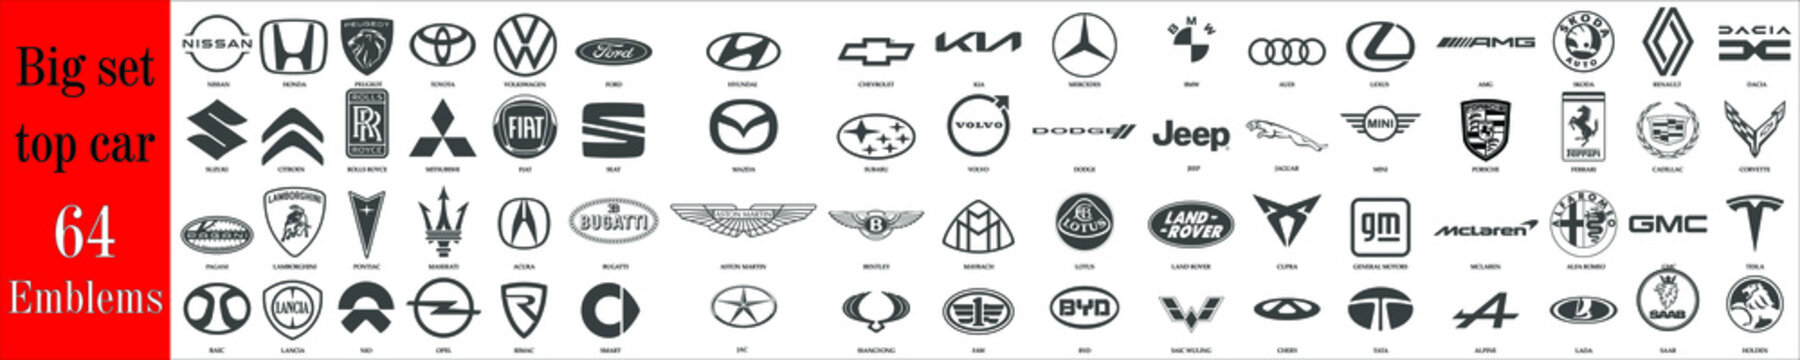 New emblem - Peugeot, Renault, Nissan, BMW, Kia, Dacia. New design. Big Set of popular logos of cars brands: Audi, Mercedes, BMW, Aston Martin, Rolls Royce, Porsche, Ferrari, McLaren, Maserati, Maybac